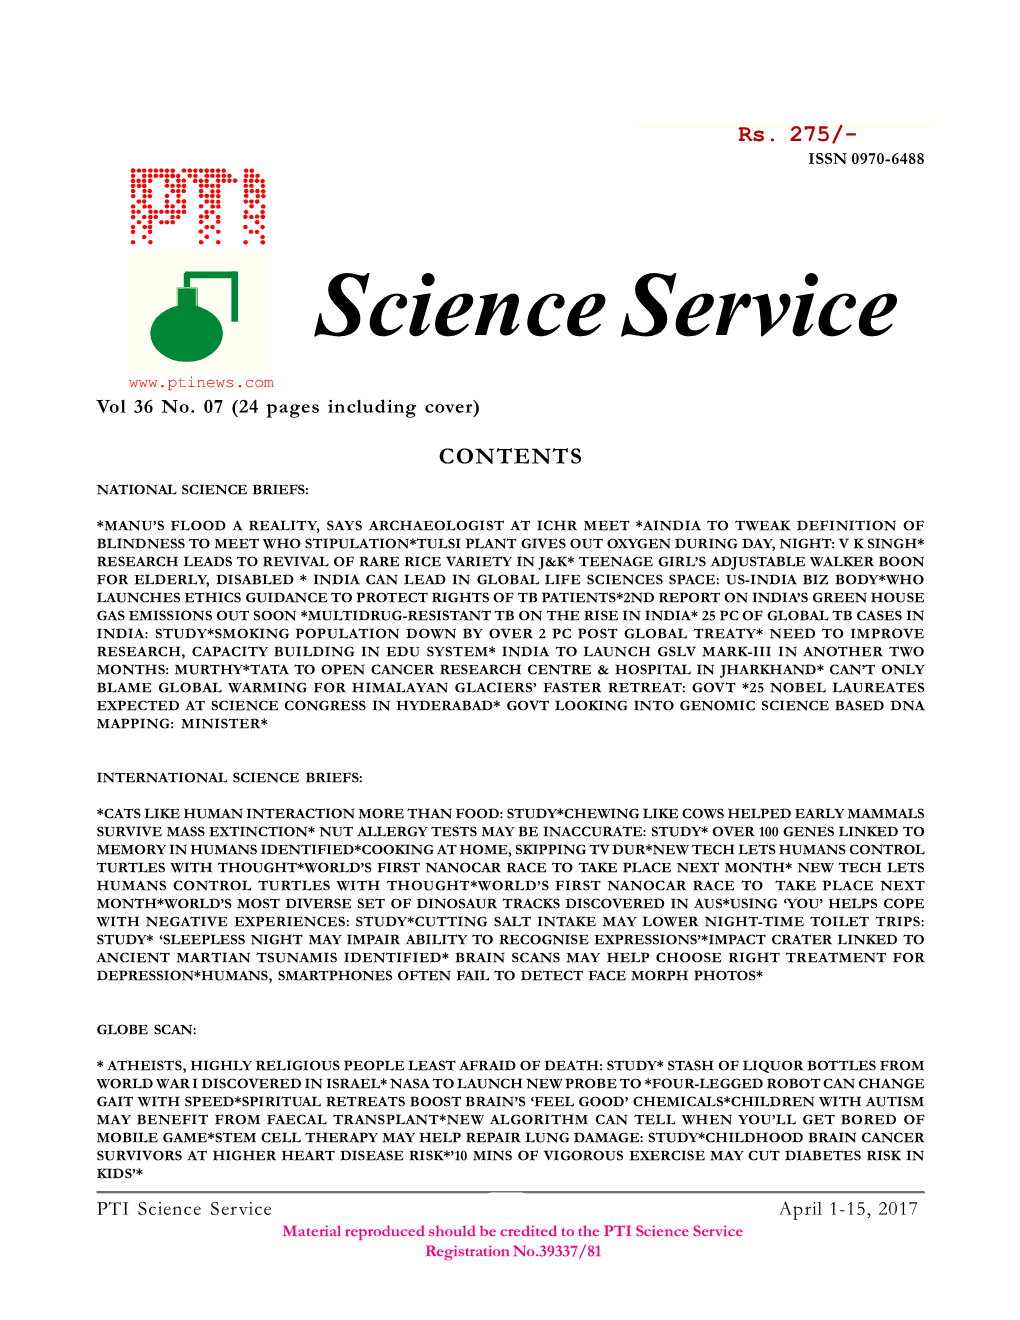 Science Service